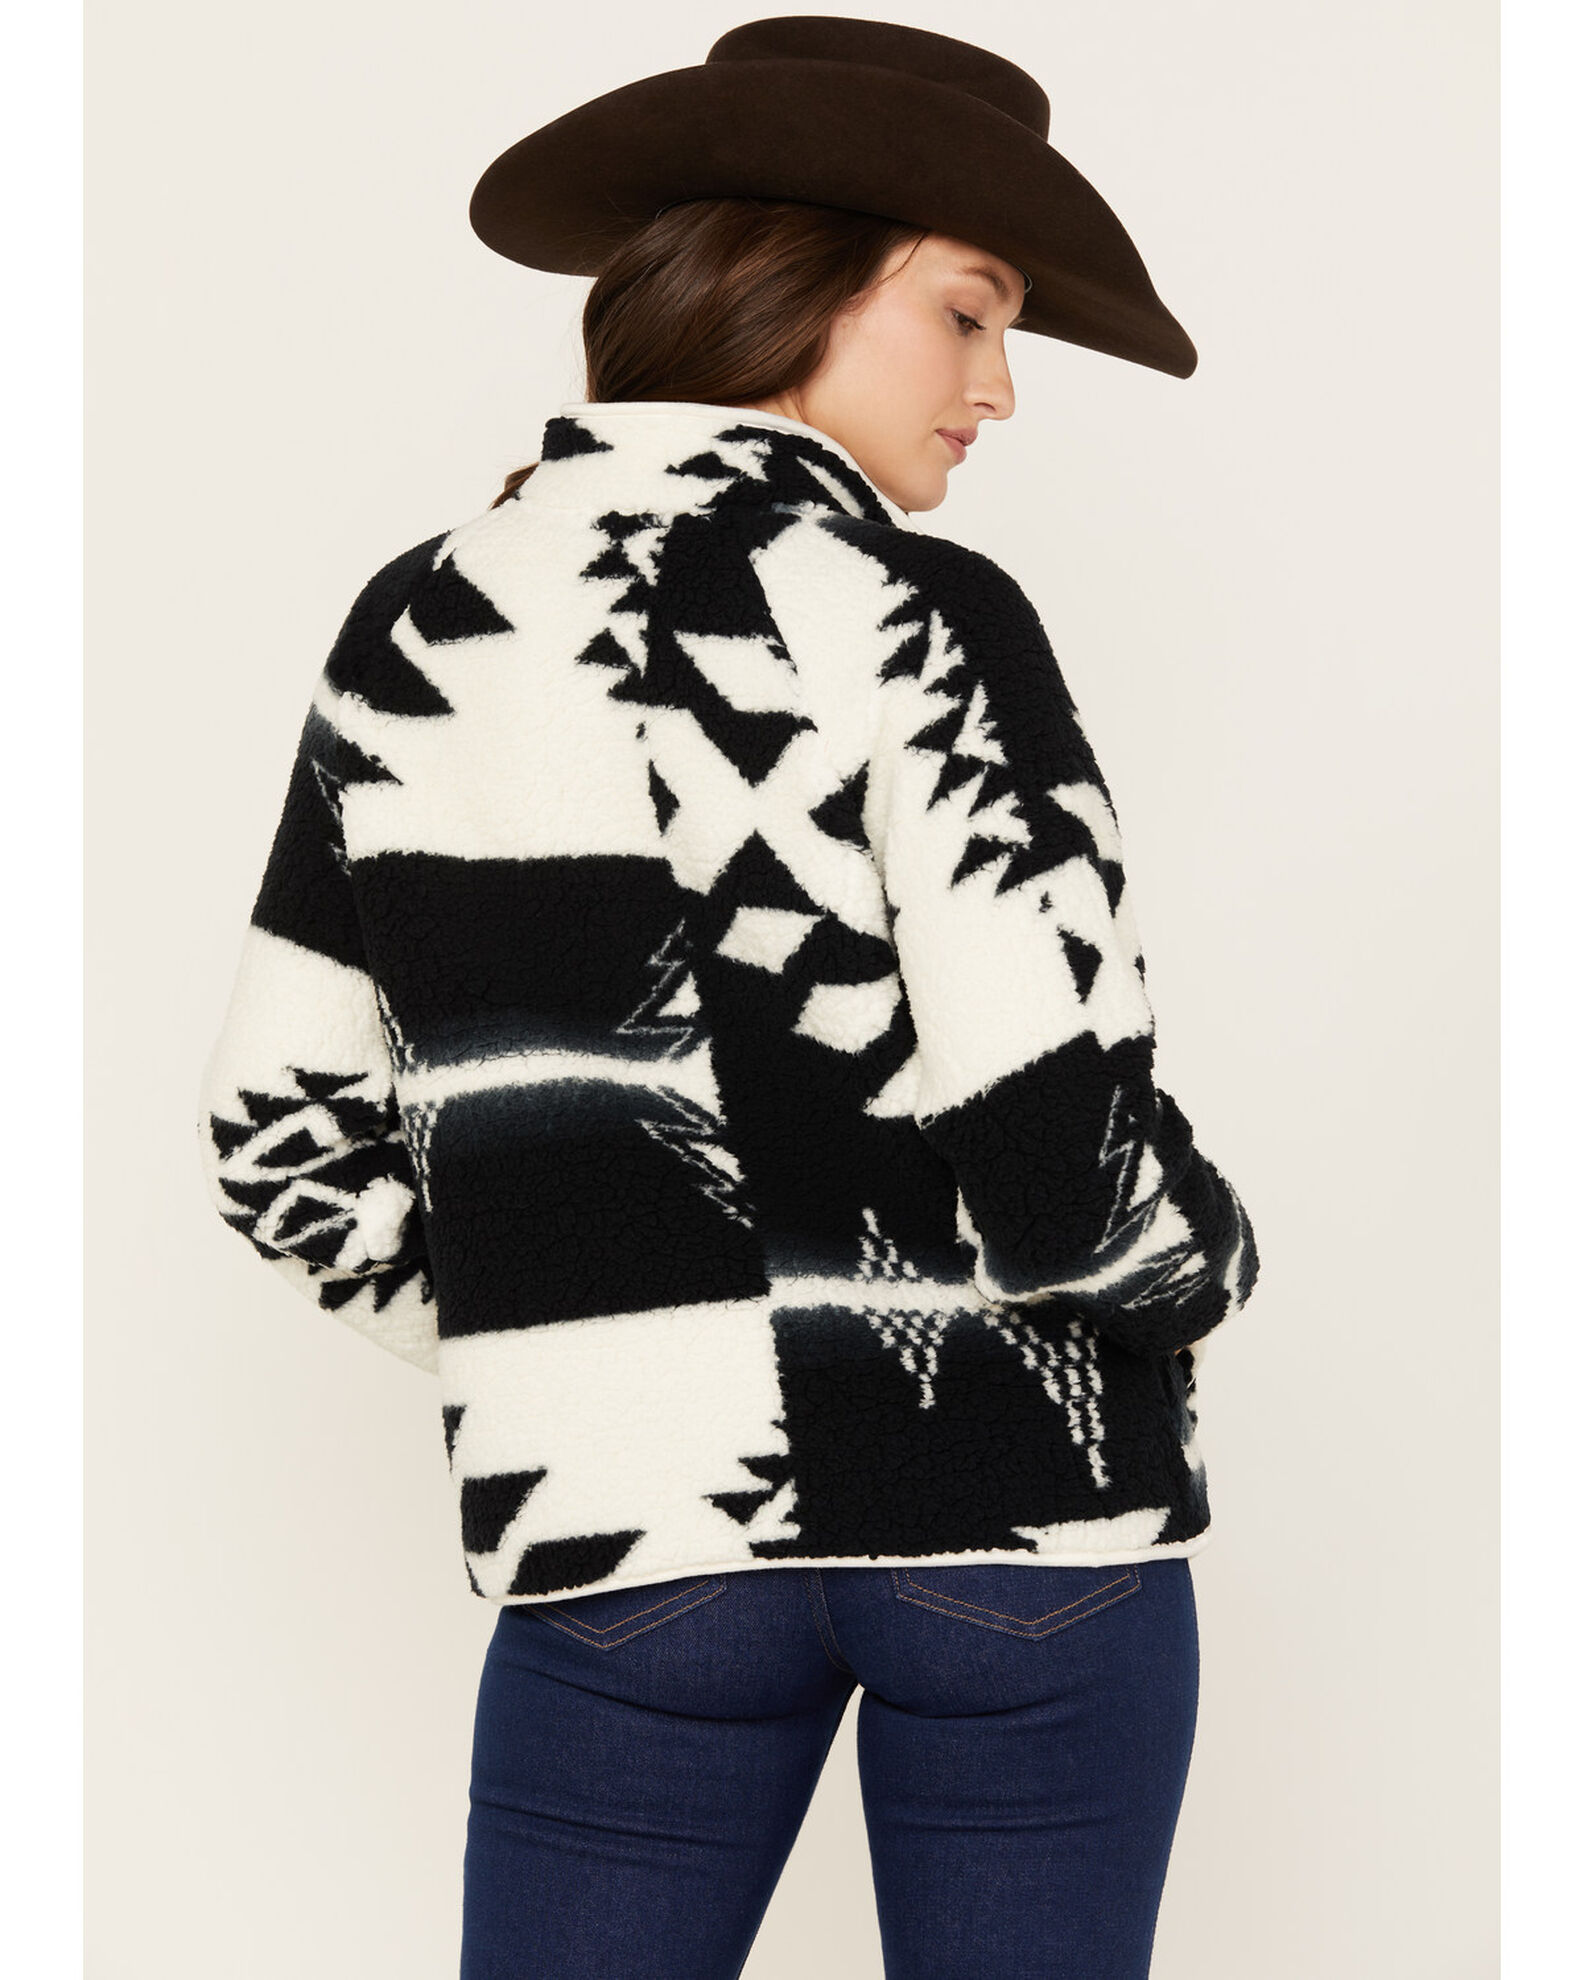 Wrangler Women's Southwestern Print Sherpa Jacket